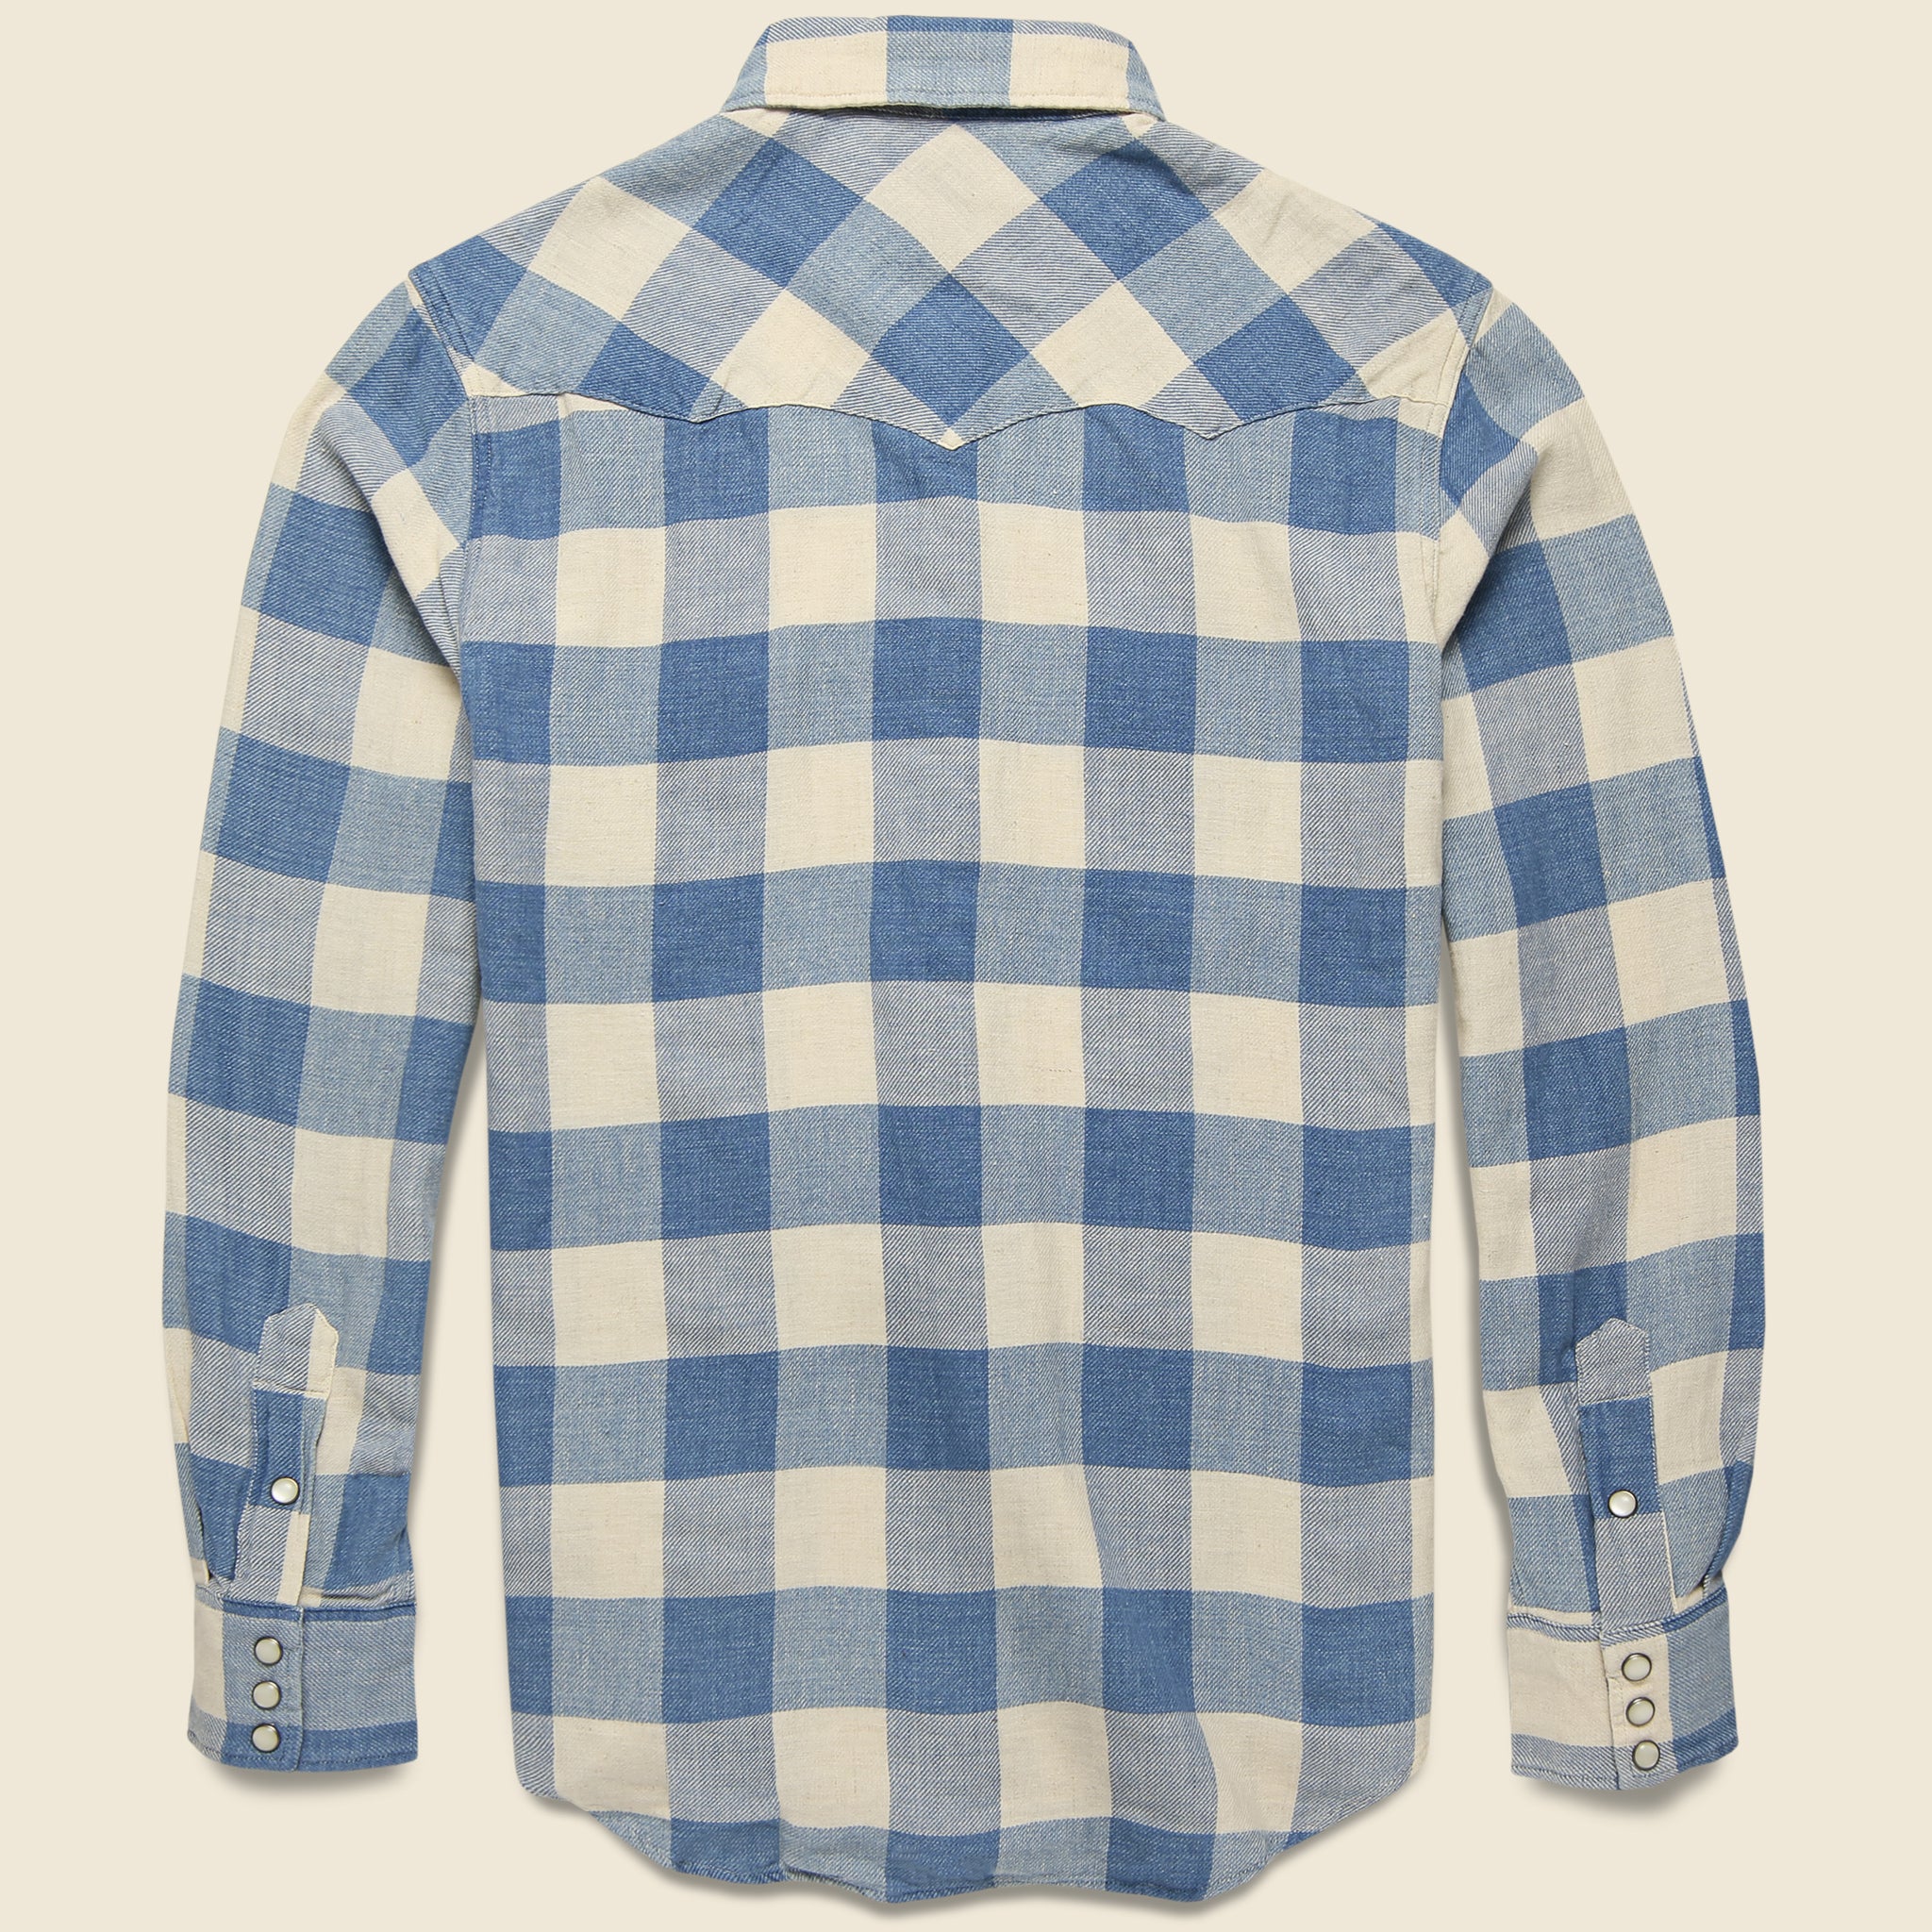 Buffalo Western Shirt - Indigo/Cream - RRL - STAG Provisions - Tops - L/S Woven - Plaid